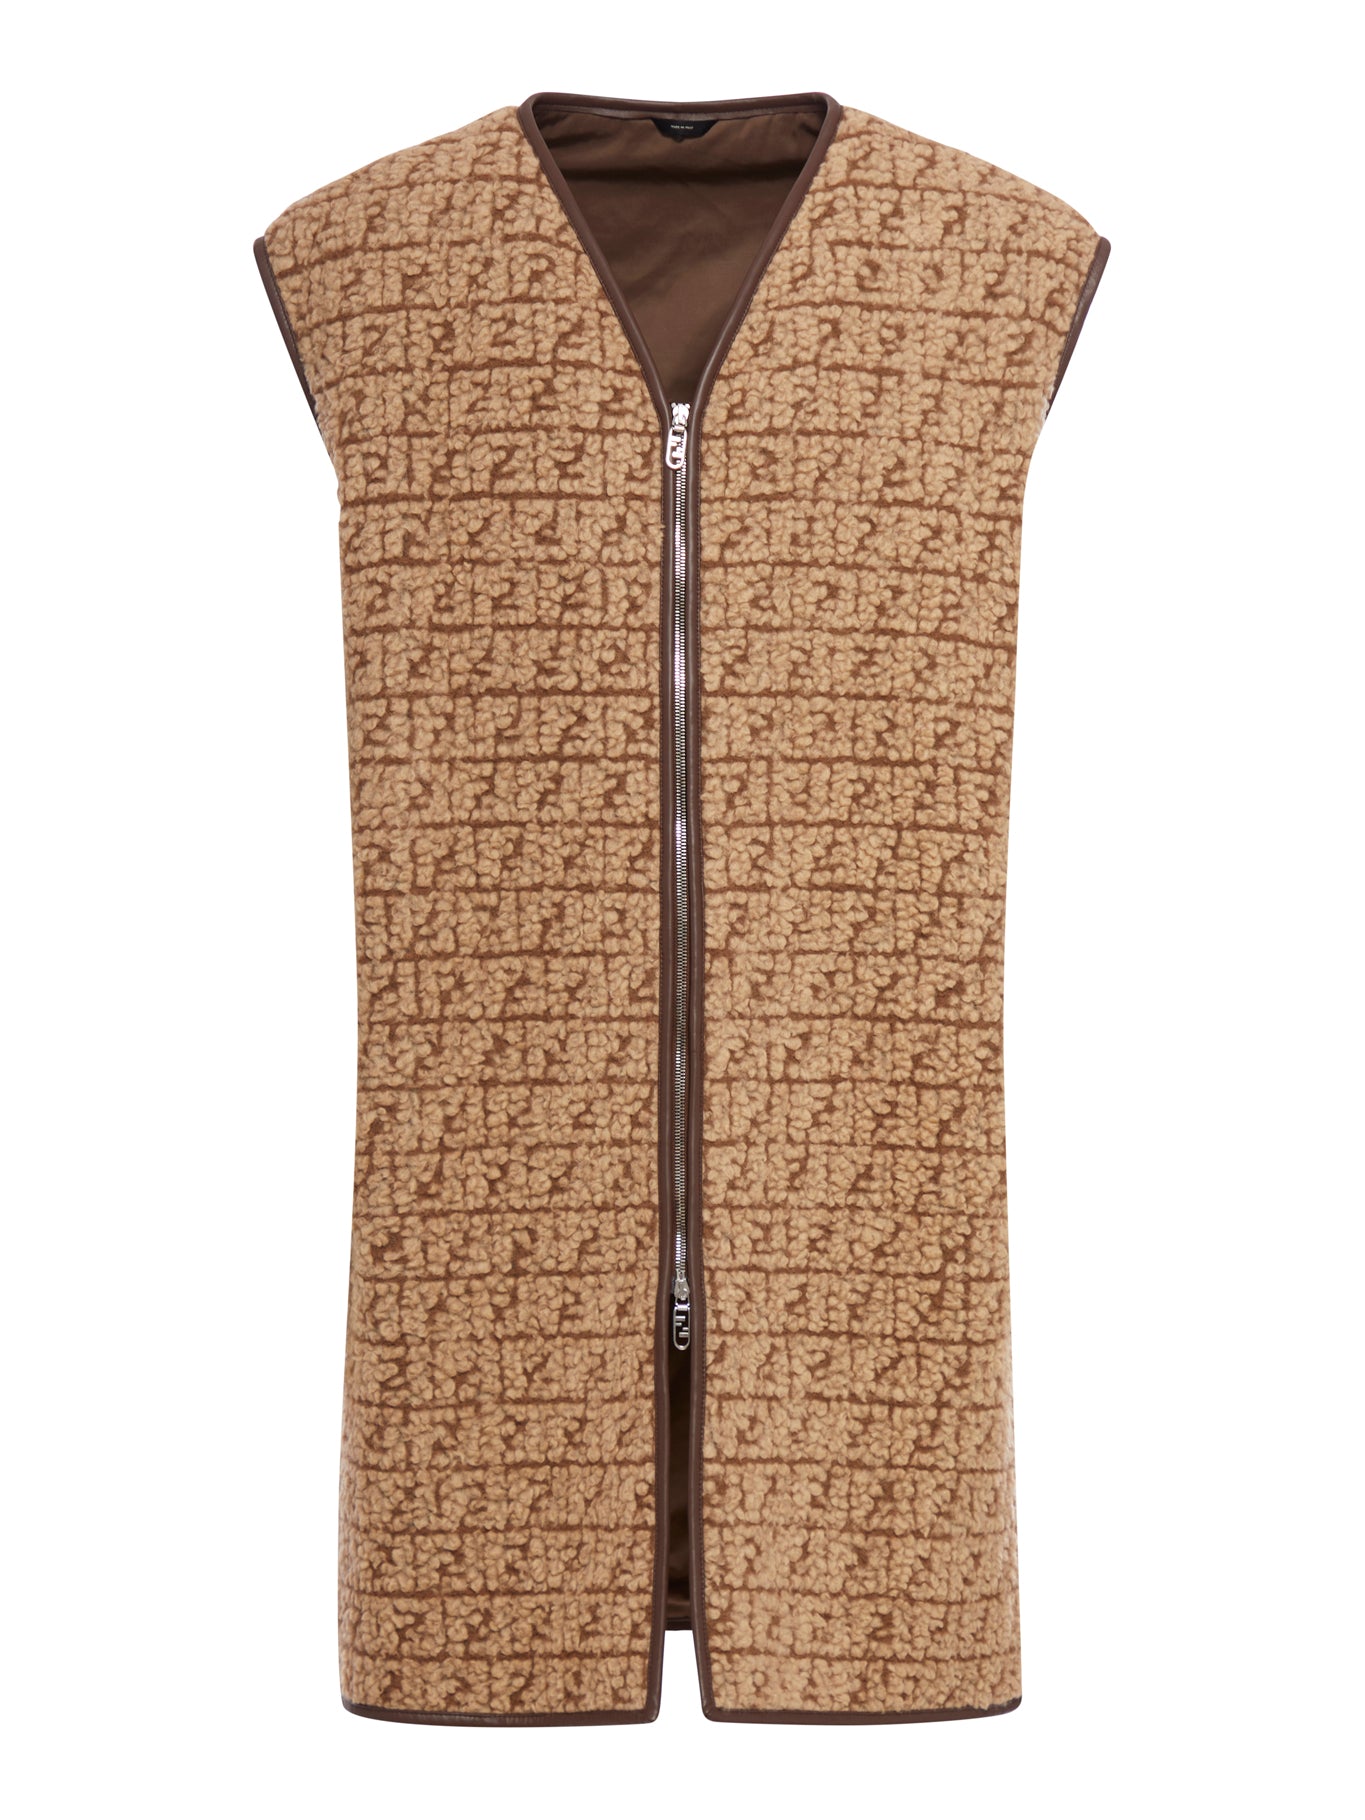 Brown teddy bear fabric vest